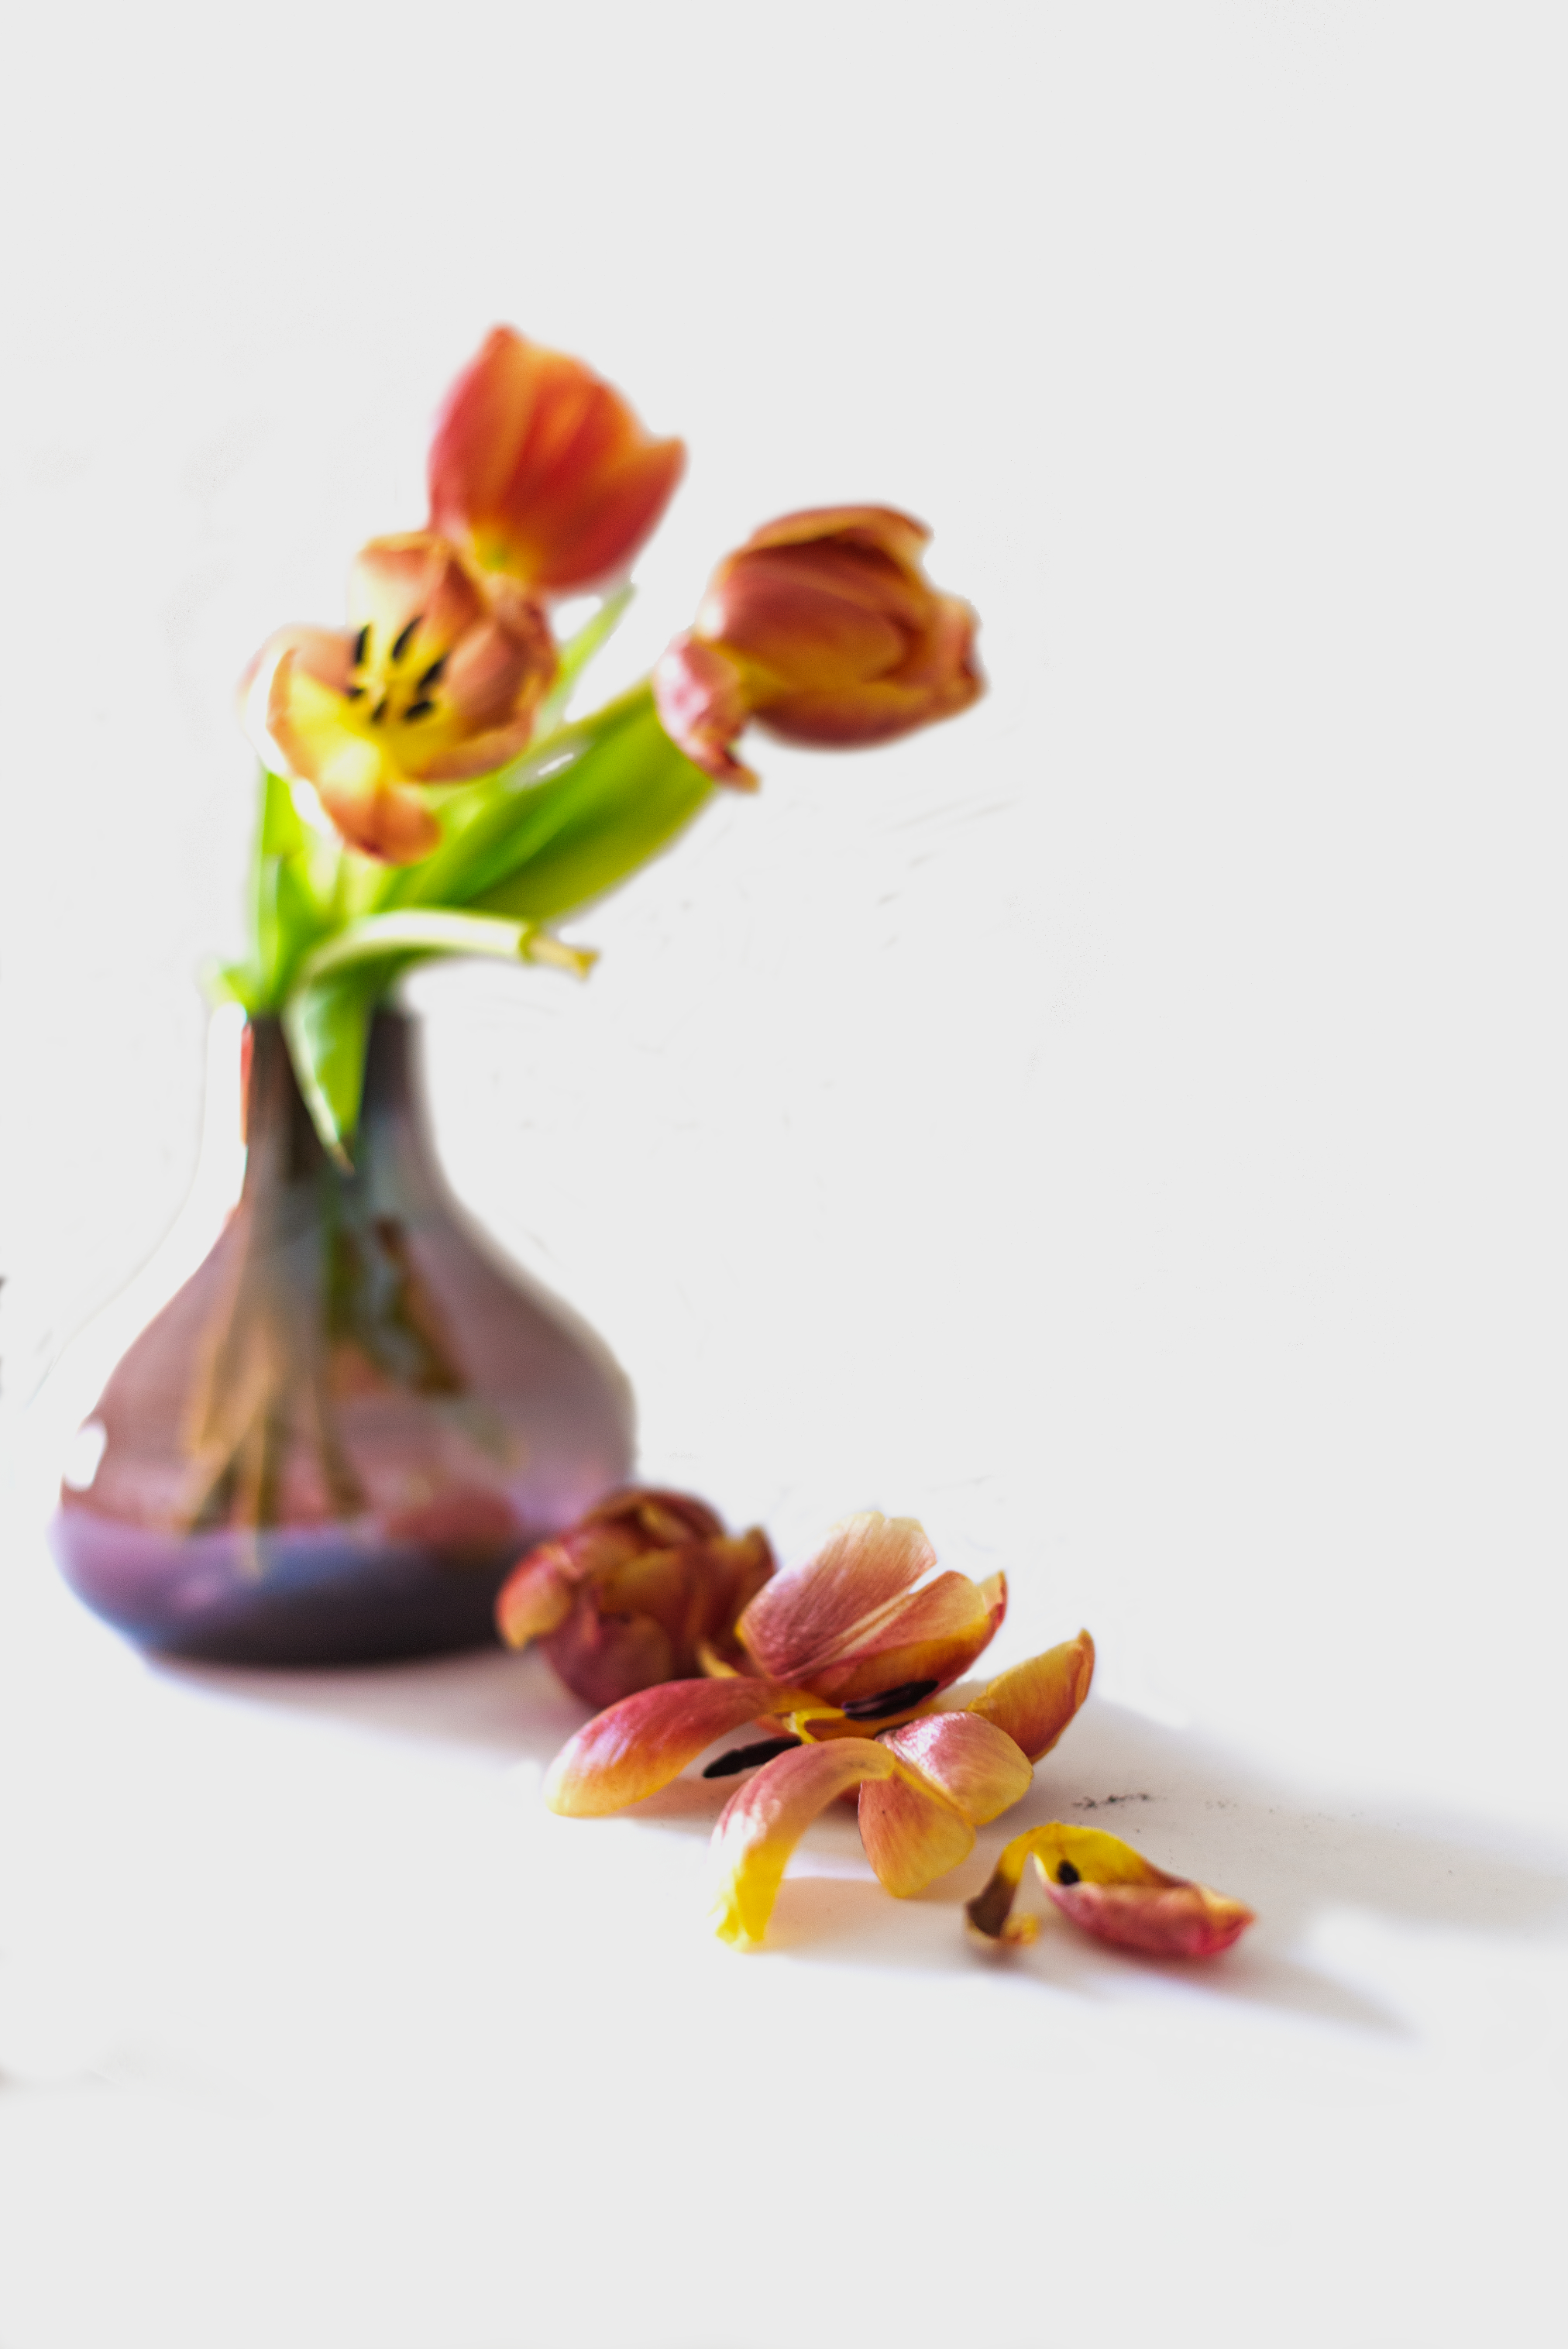 Tulpe mit abgefallenen Blütenblättern